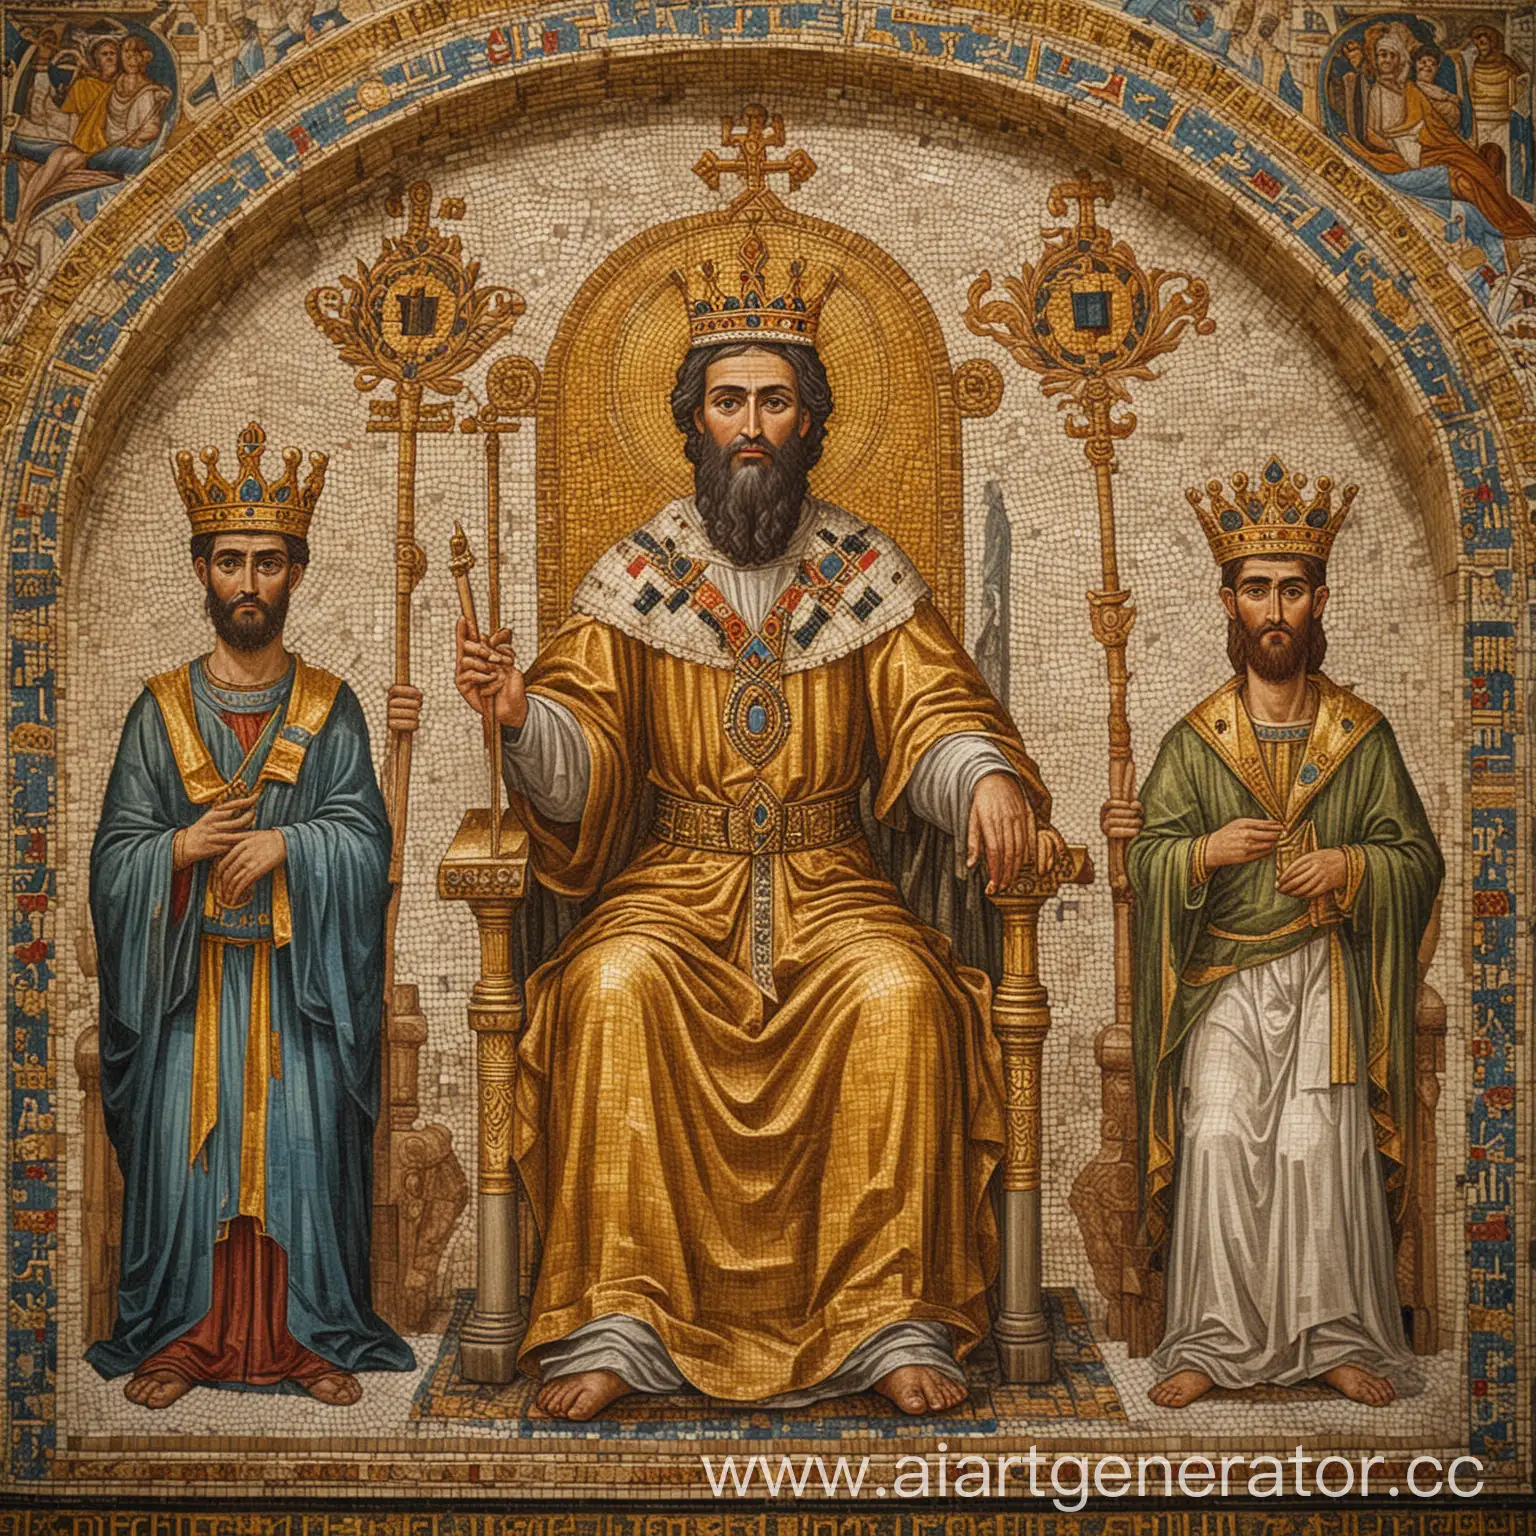 Medieval-Orthodox-Mosaic-of-Christian-Arabic-King-on-Throne-with-Regalia